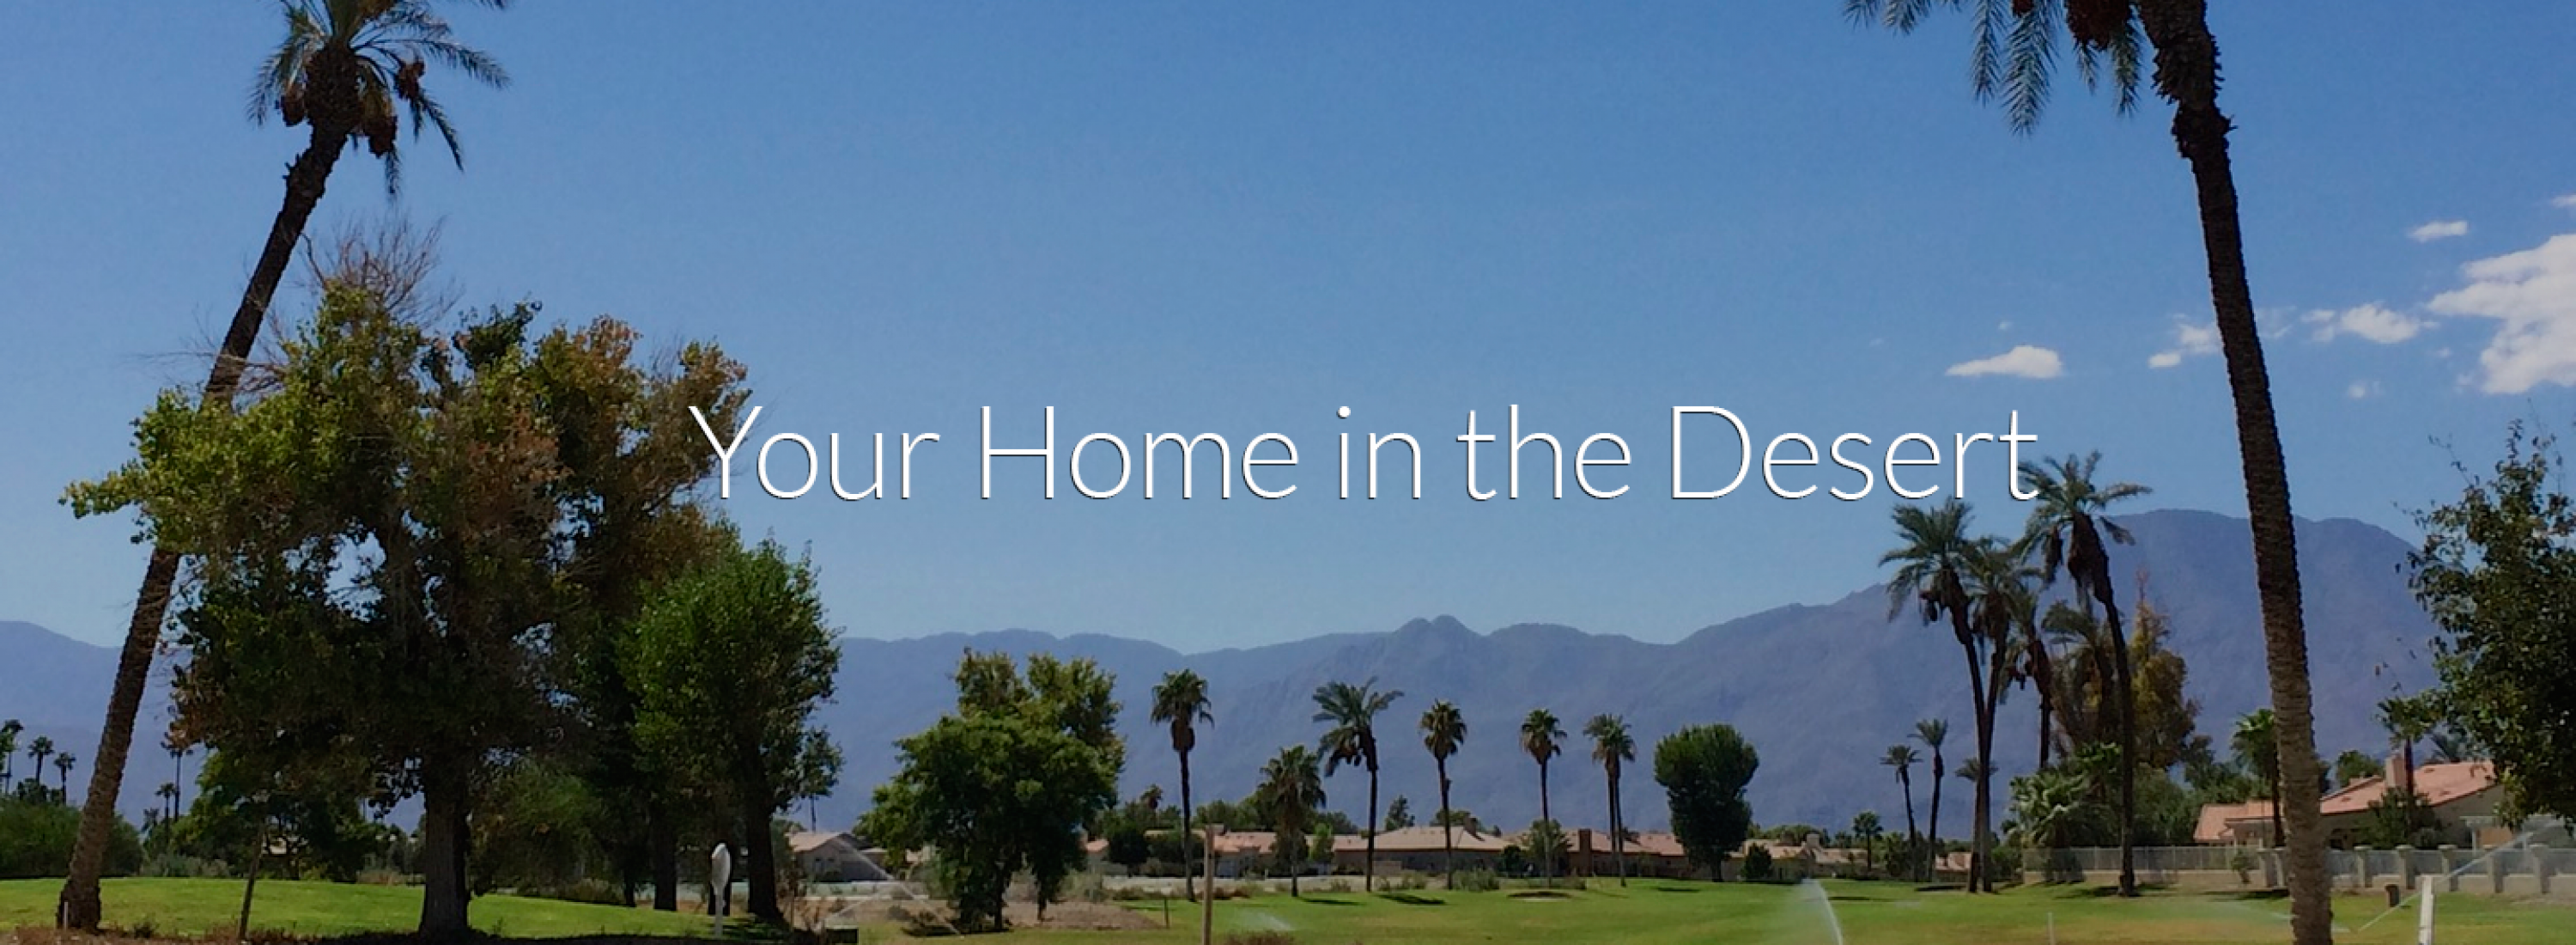 IPI Header Image - Your Home in the Desert